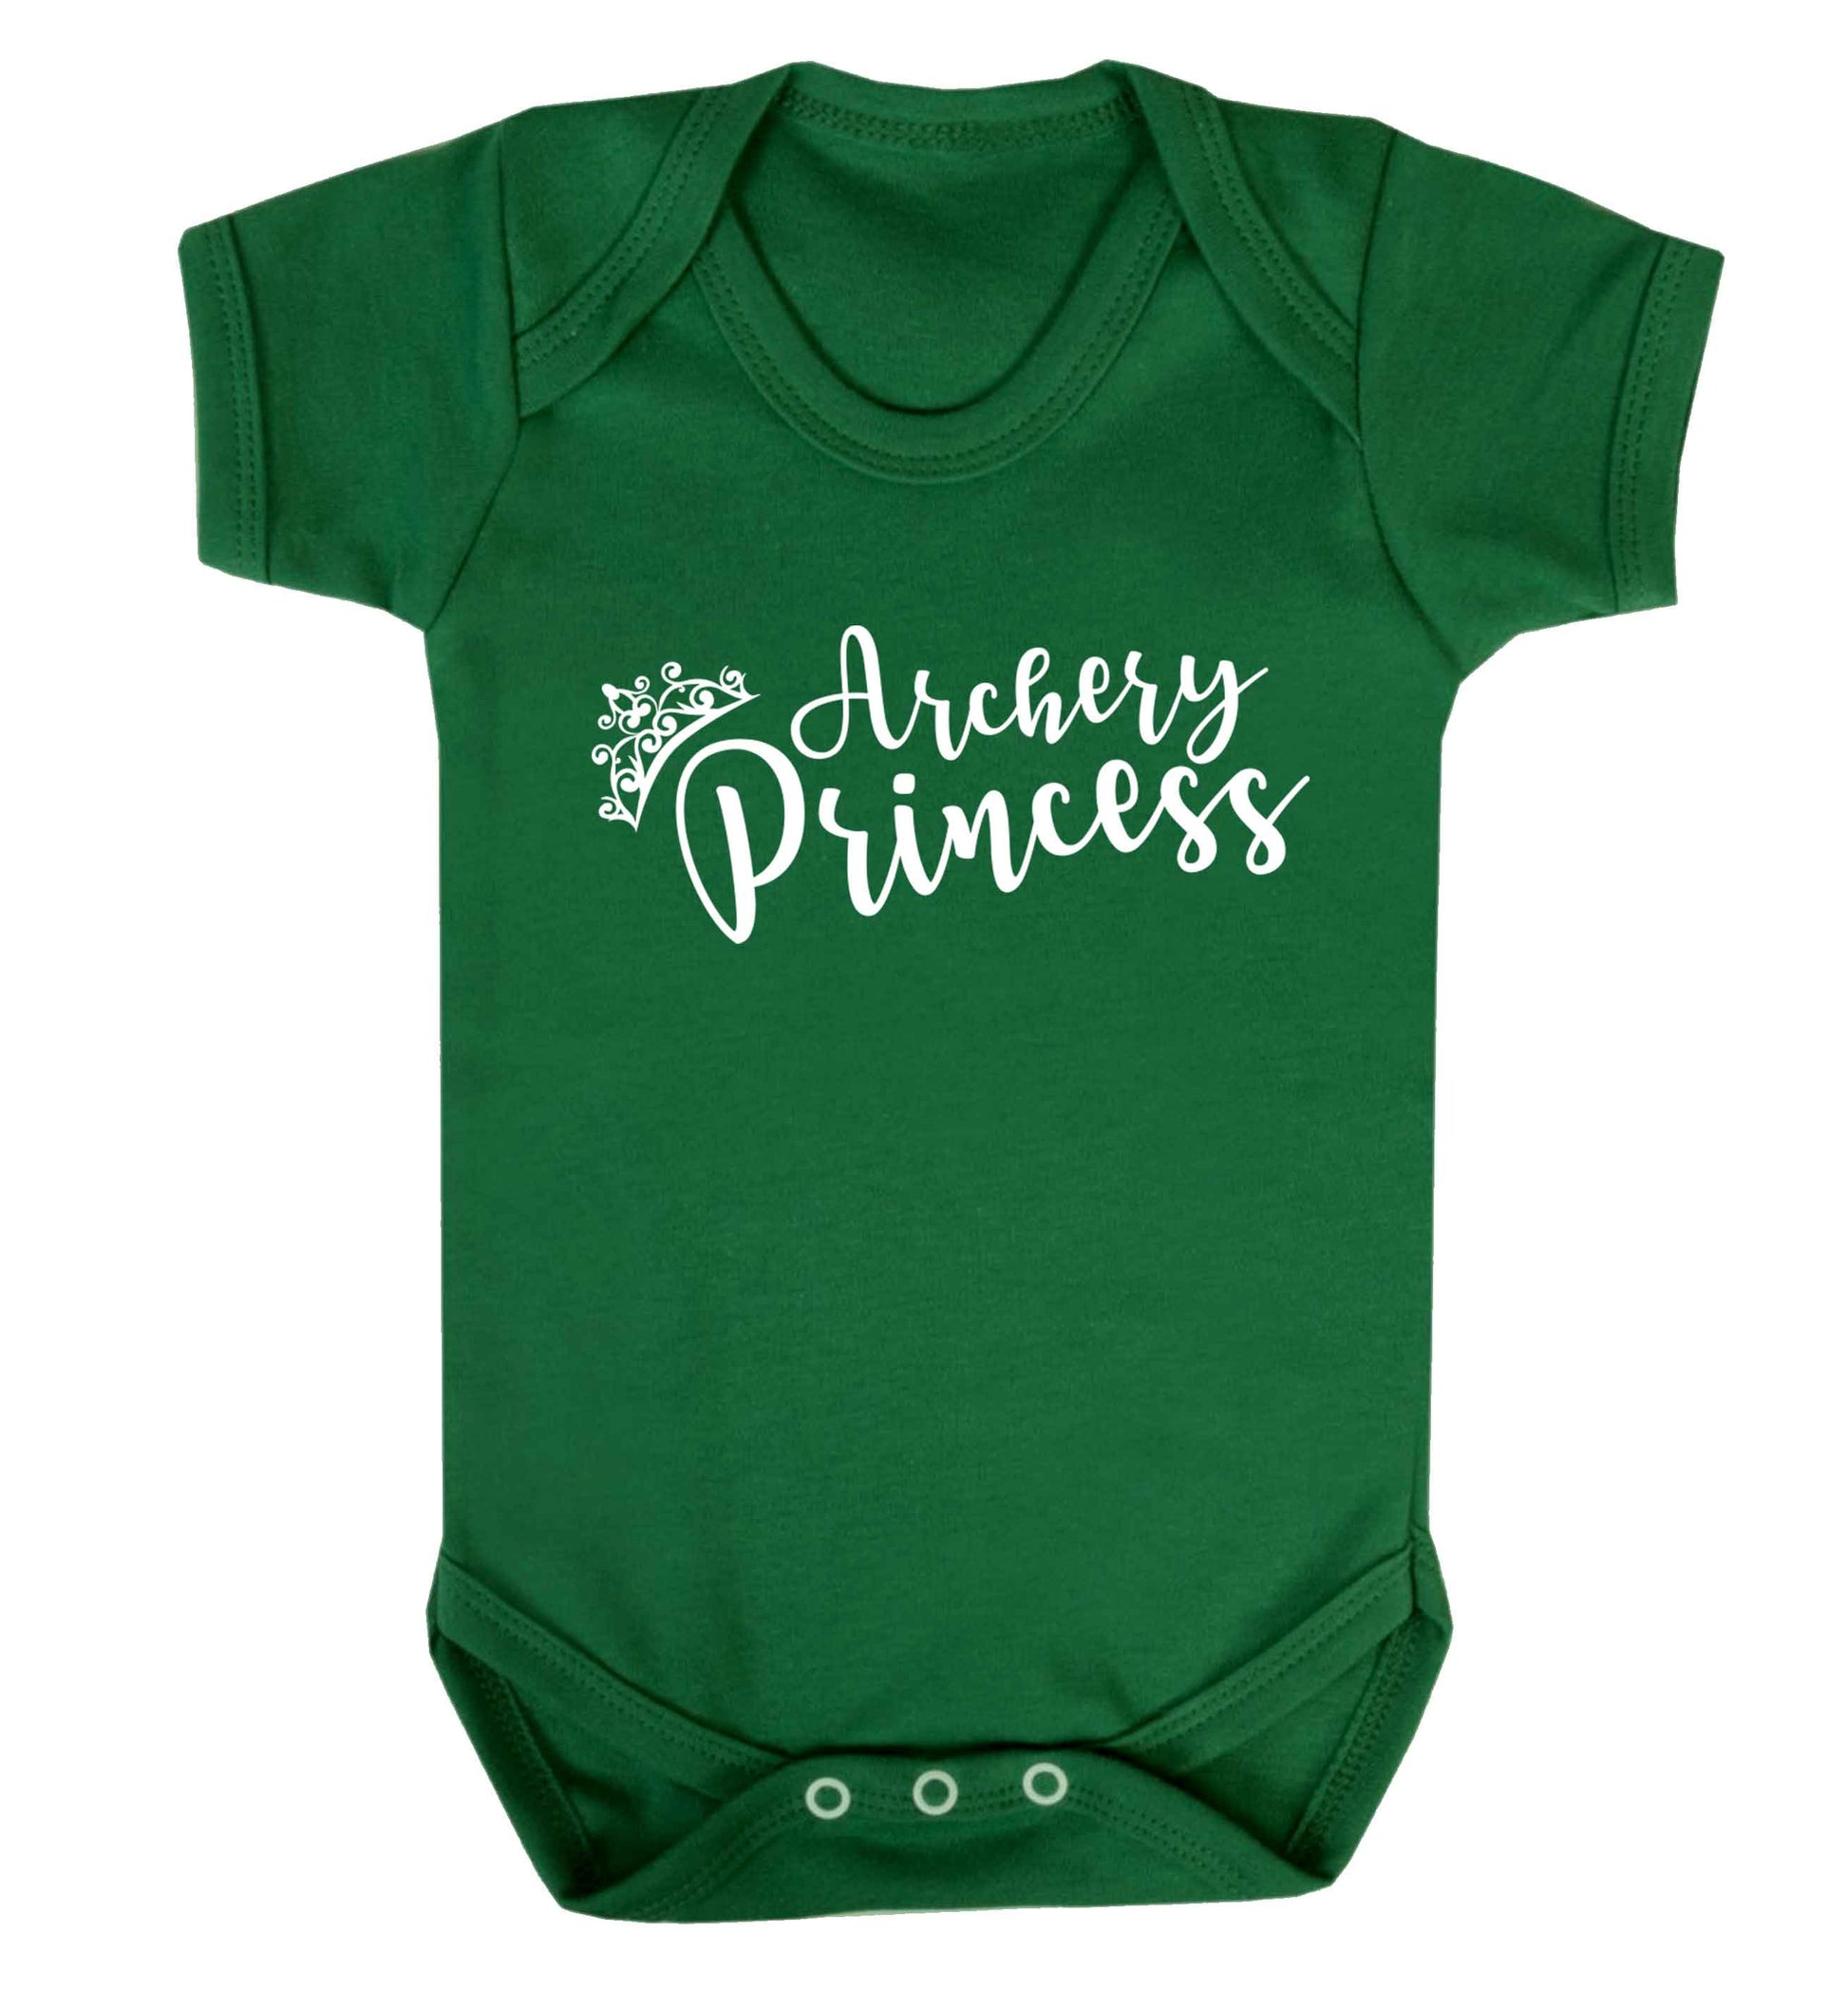 Archery princess Baby Vest green 18-24 months